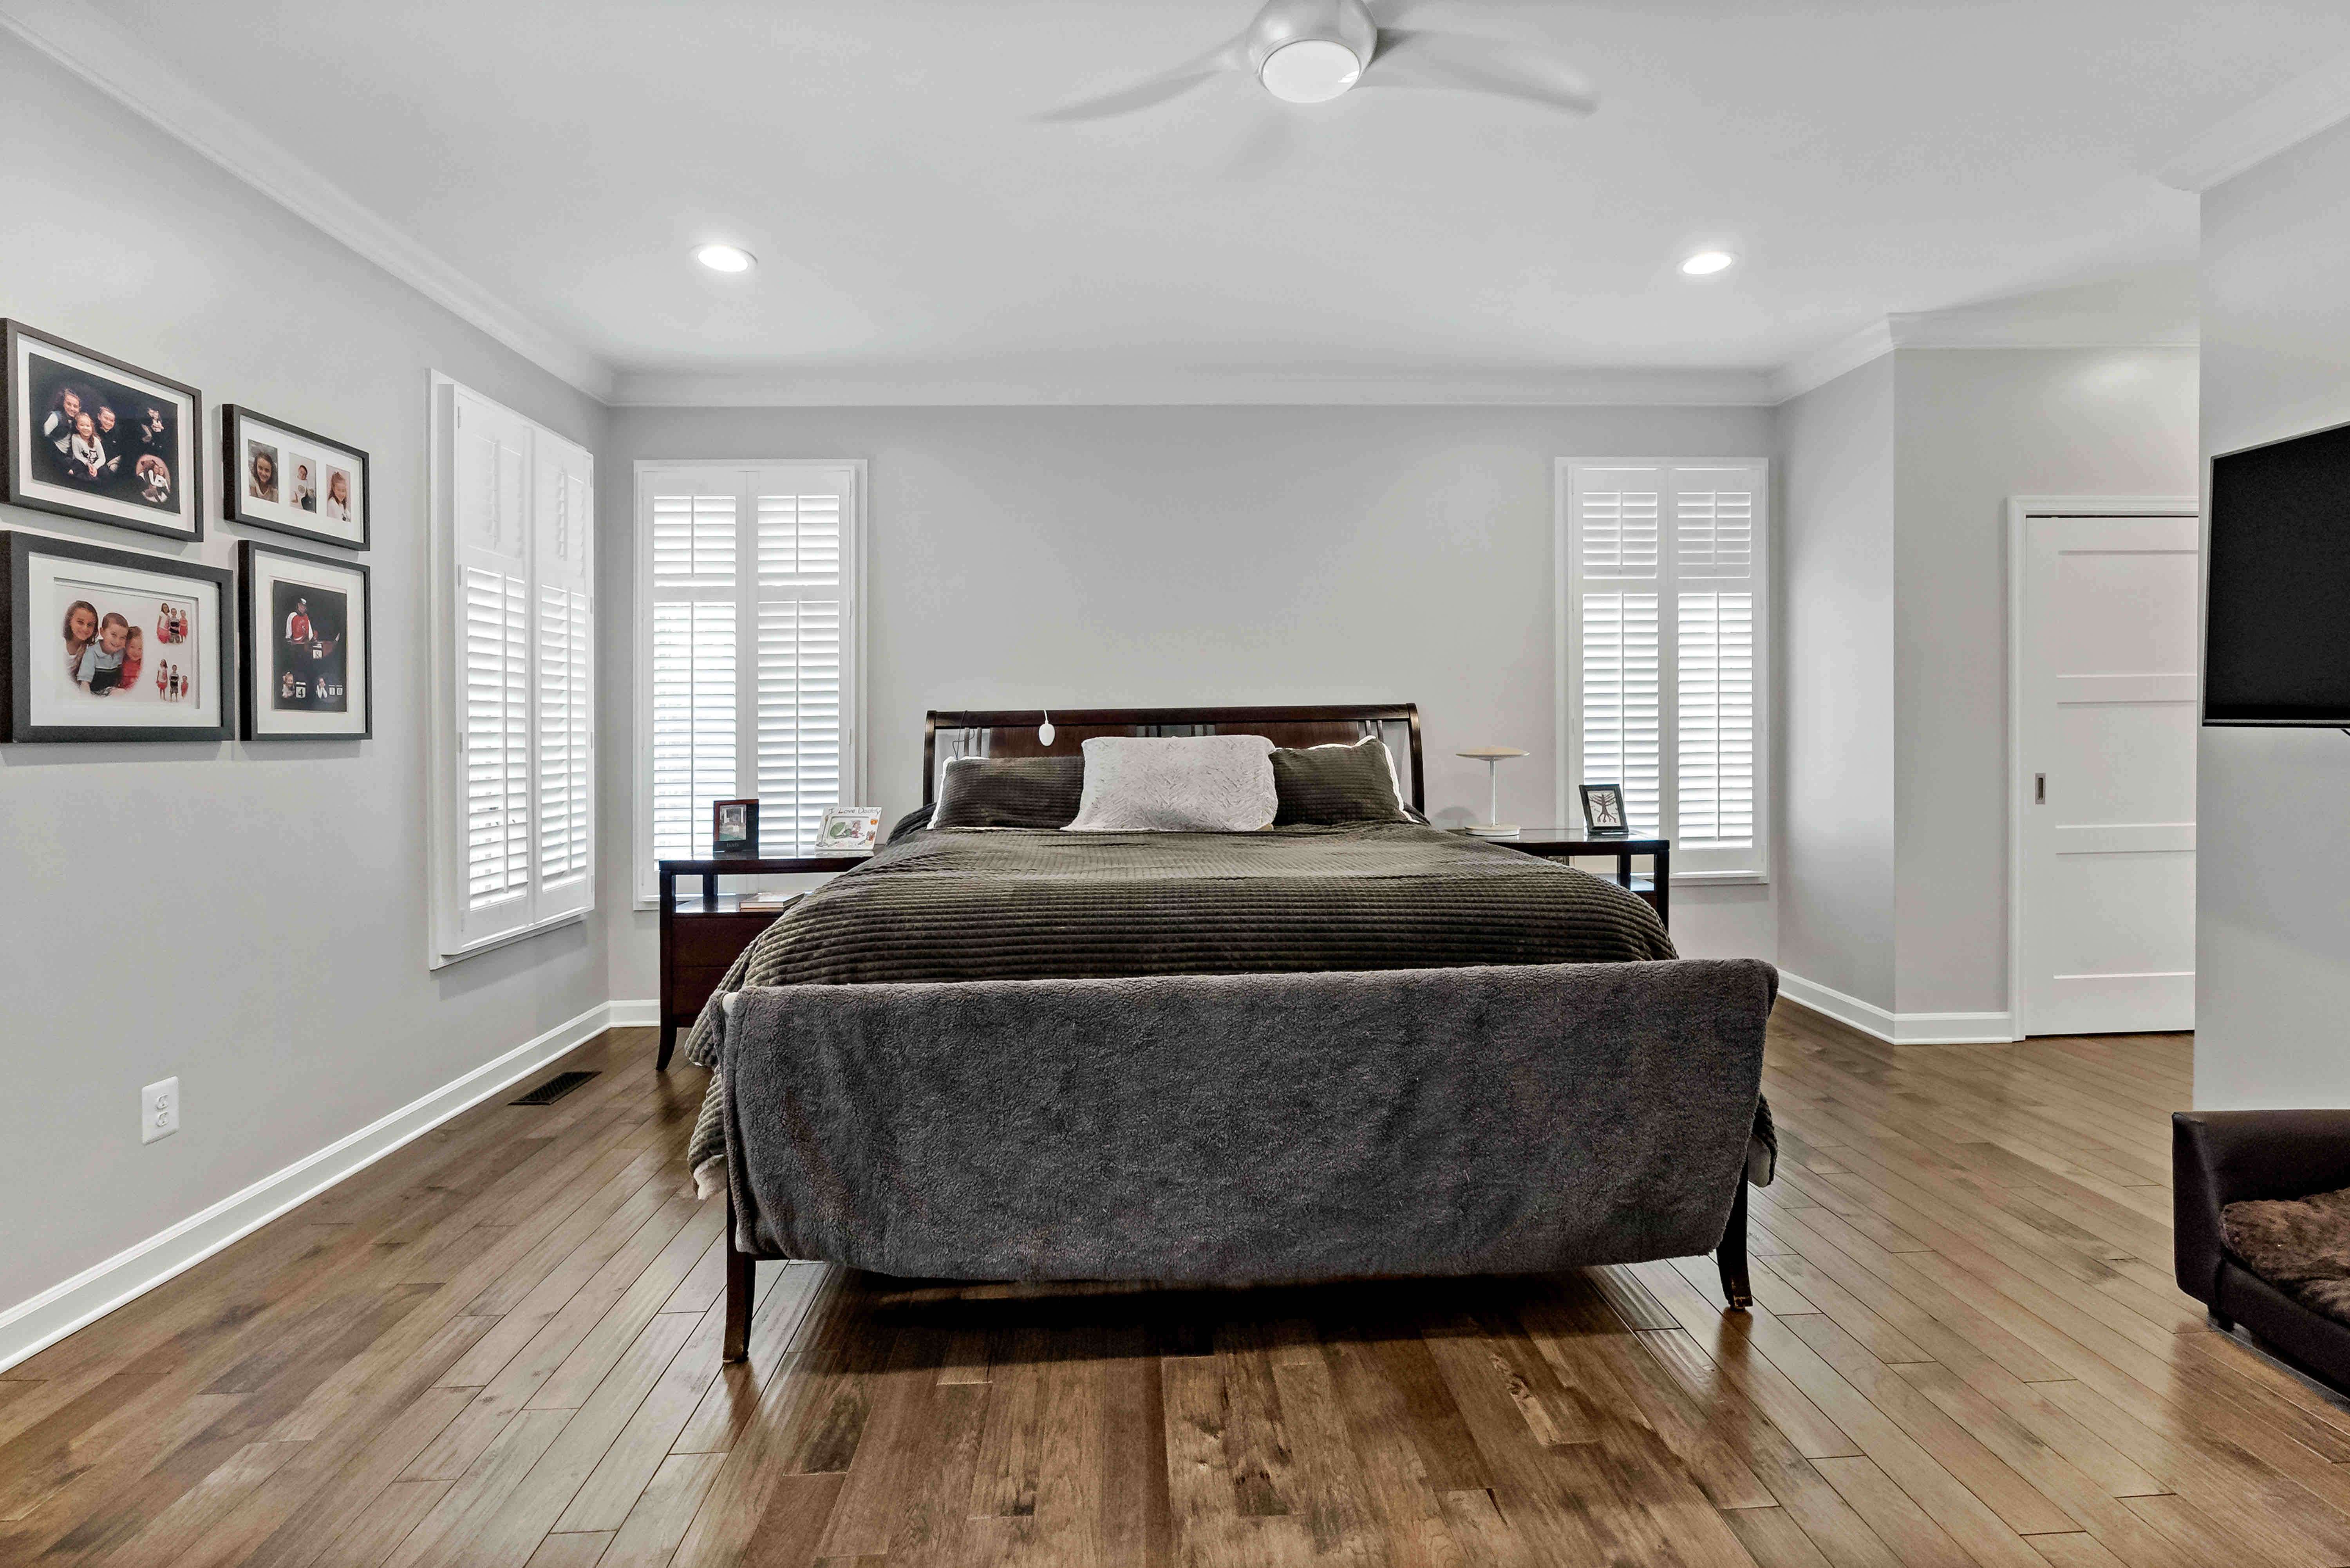 Hardwood floor bedroom with white walls and trim